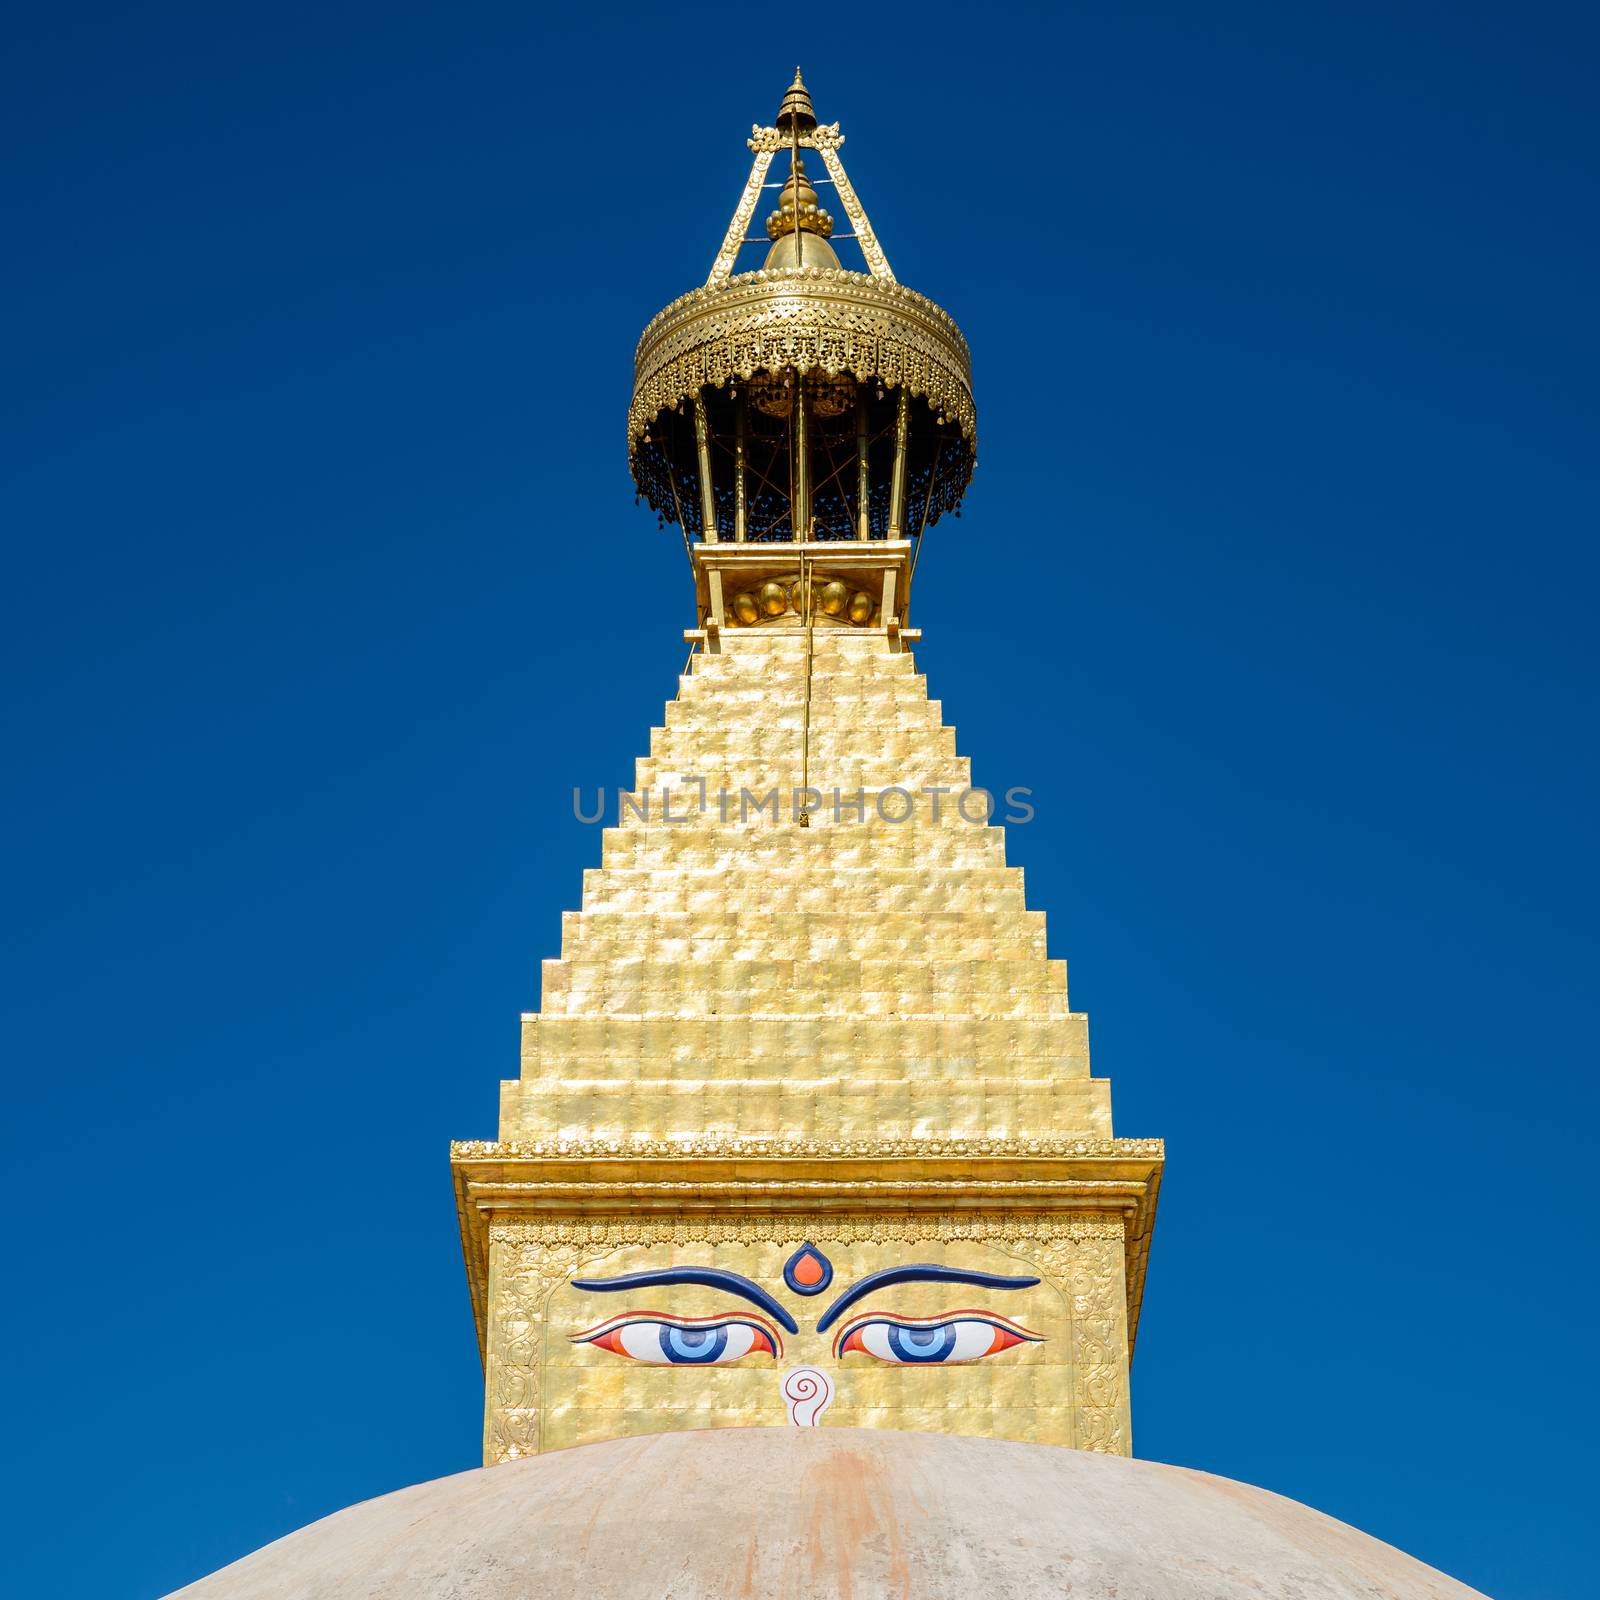 Boudhanath stupa in Kathmandu, Nepal. The top has been rebuilt since 2015 Nepal earthquake.